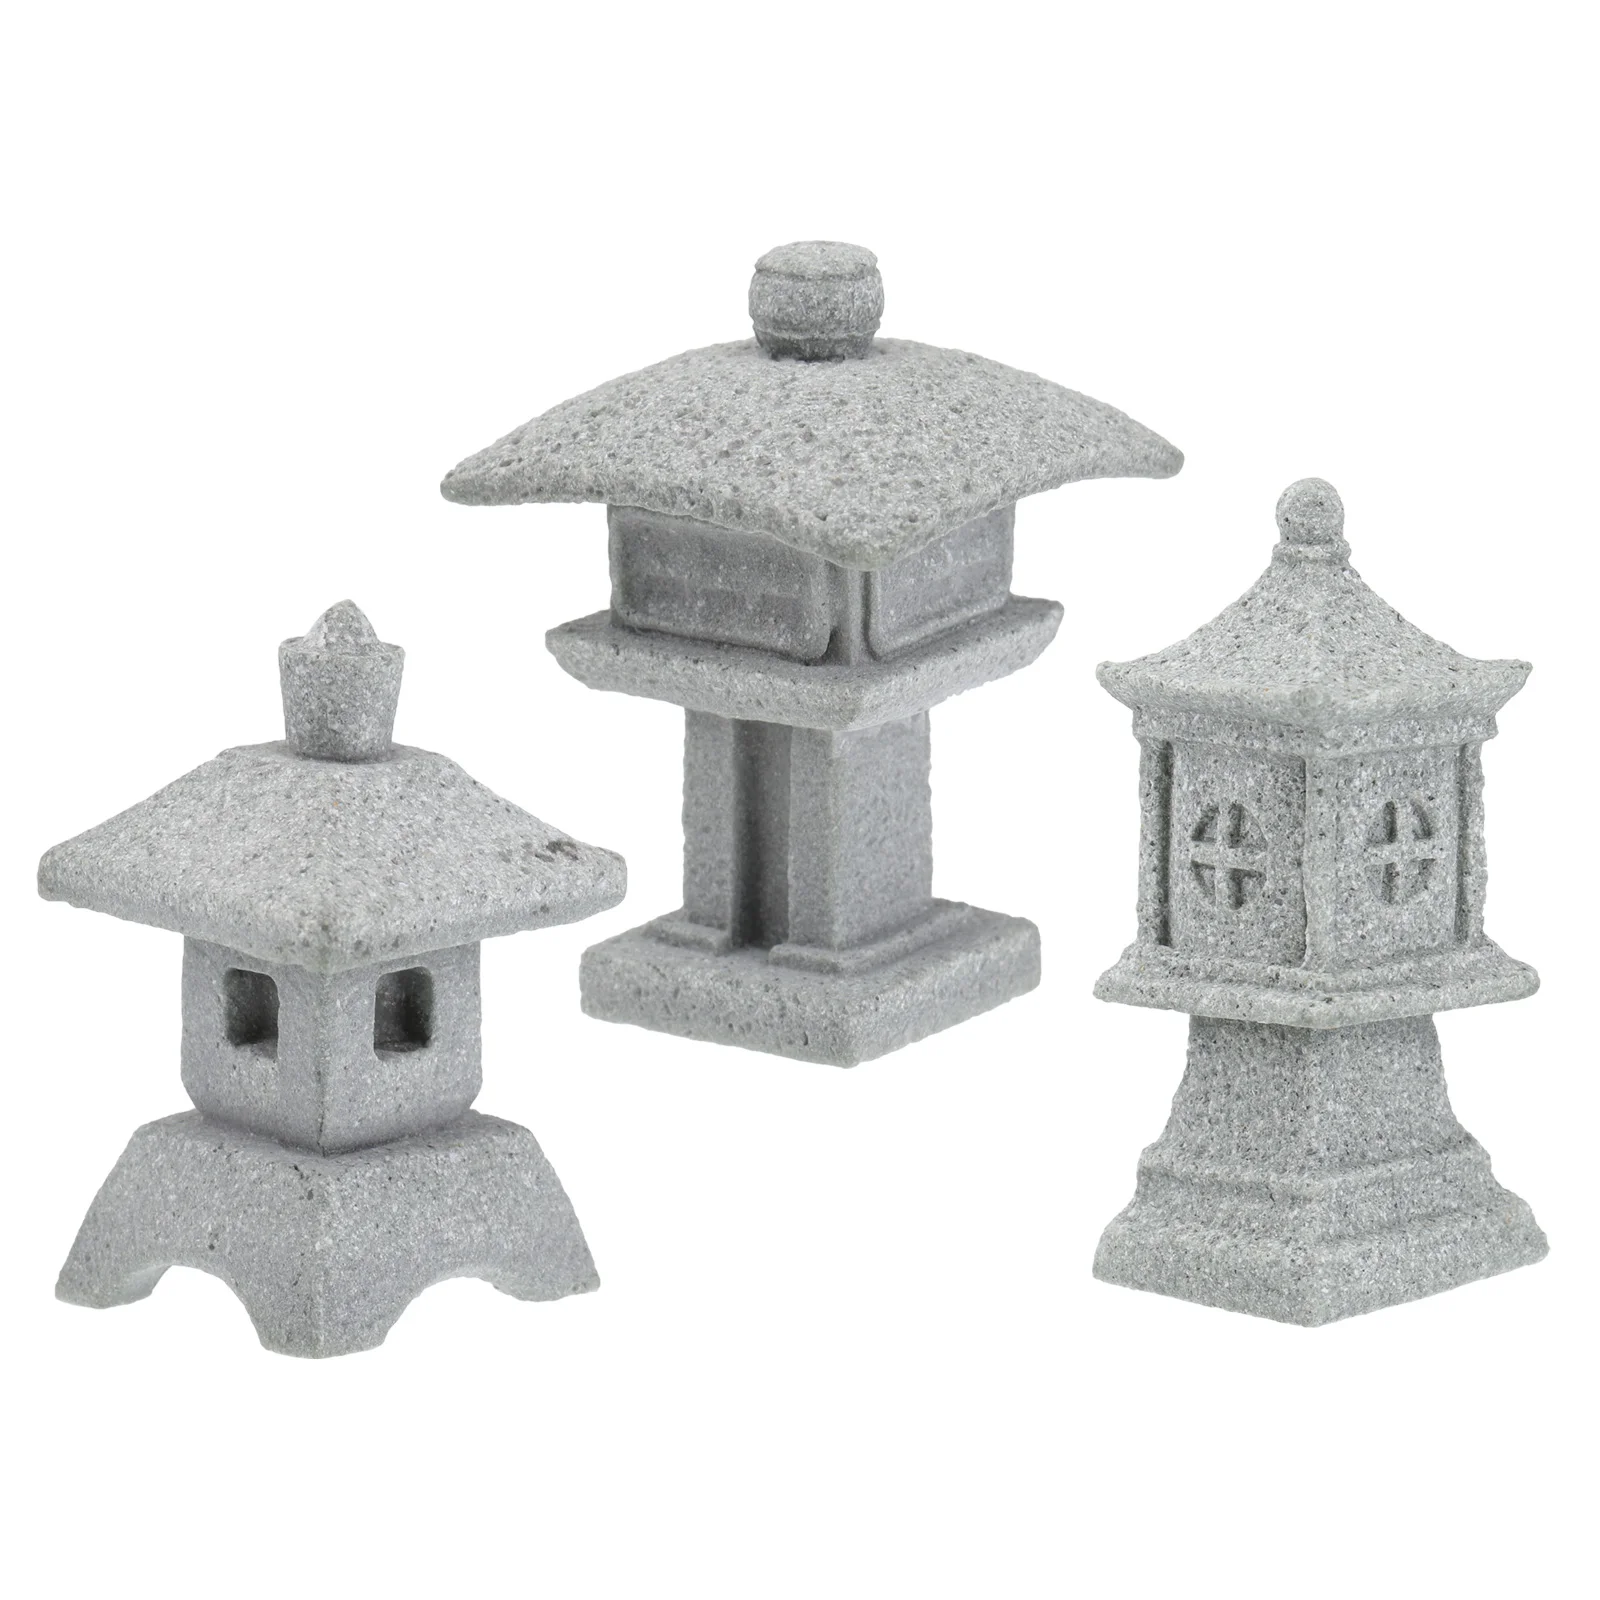 

3pcs Micro Landscape Ornaments Asian Miniatures Pagoda Sculpture Garden Miniature Figurines Chinese Zen Asian Decor